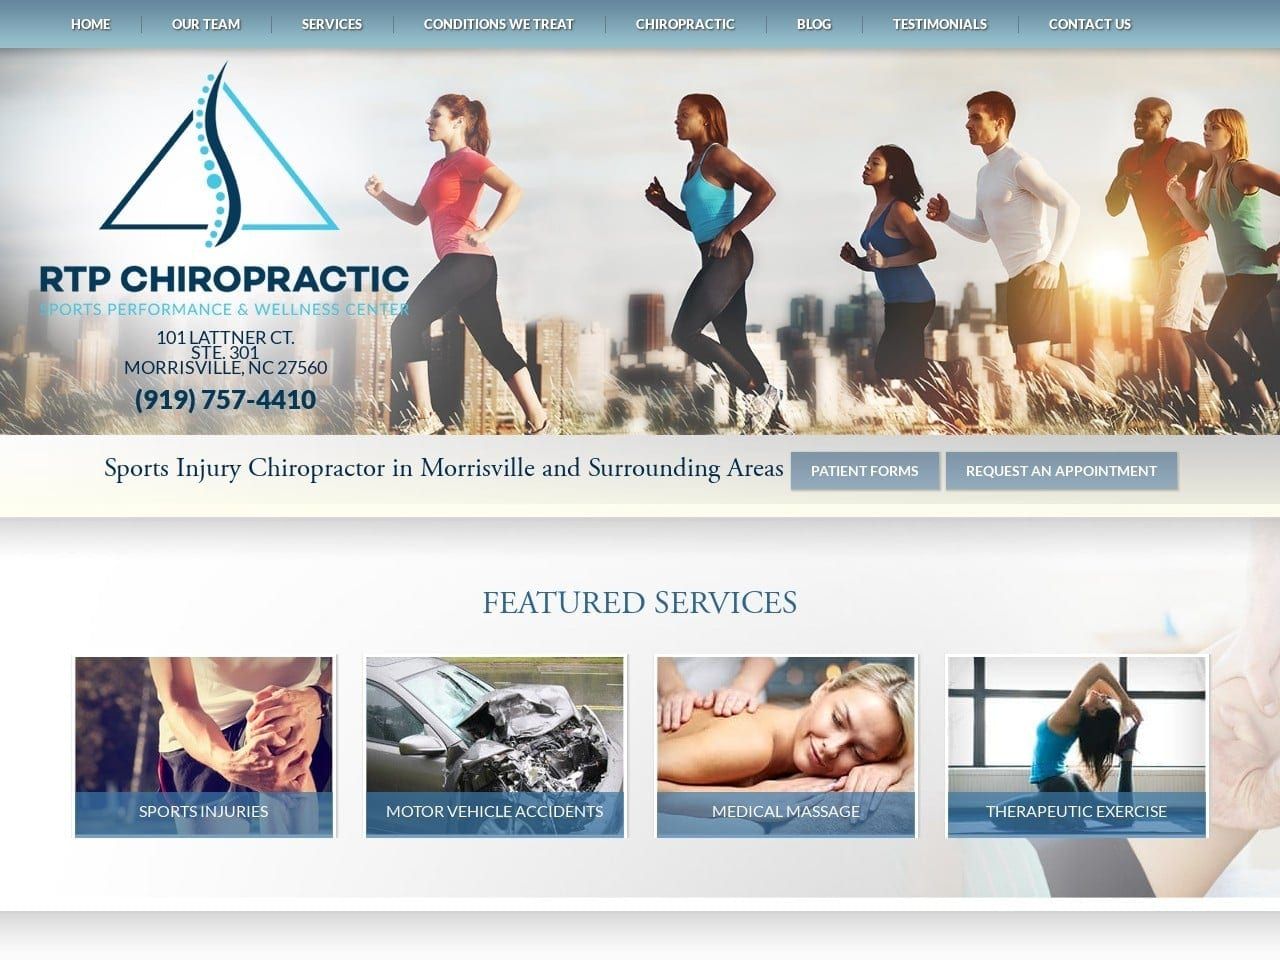 Rtp Chiropractic Website Screenshot From Url Rtpchiropractic.com